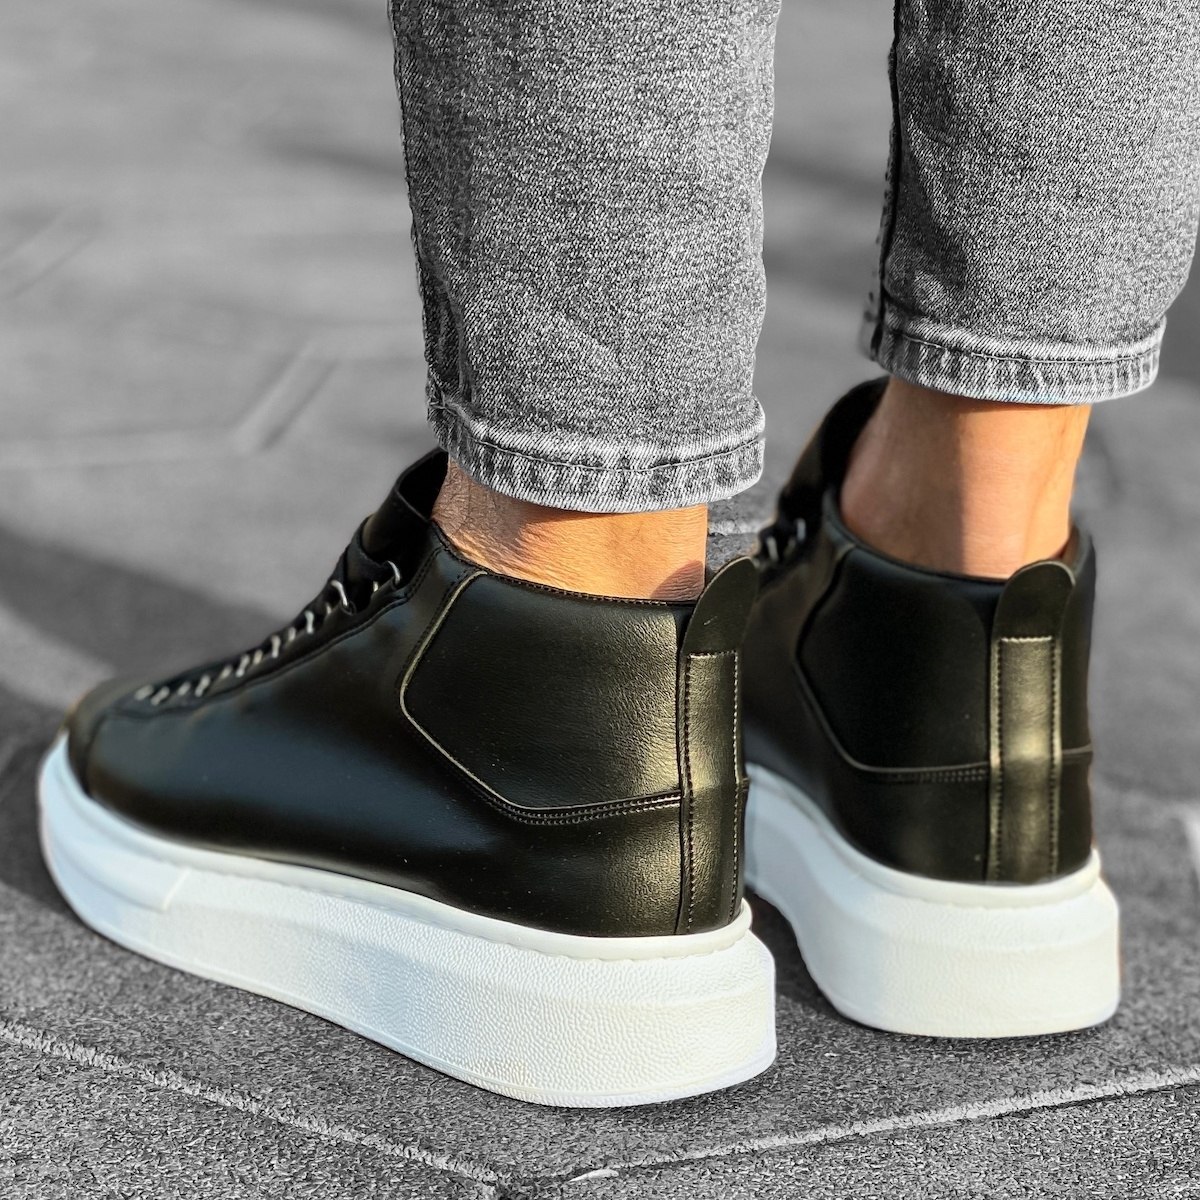 Men’s High Top Sneakers Shoes Black-White | Martin Valen